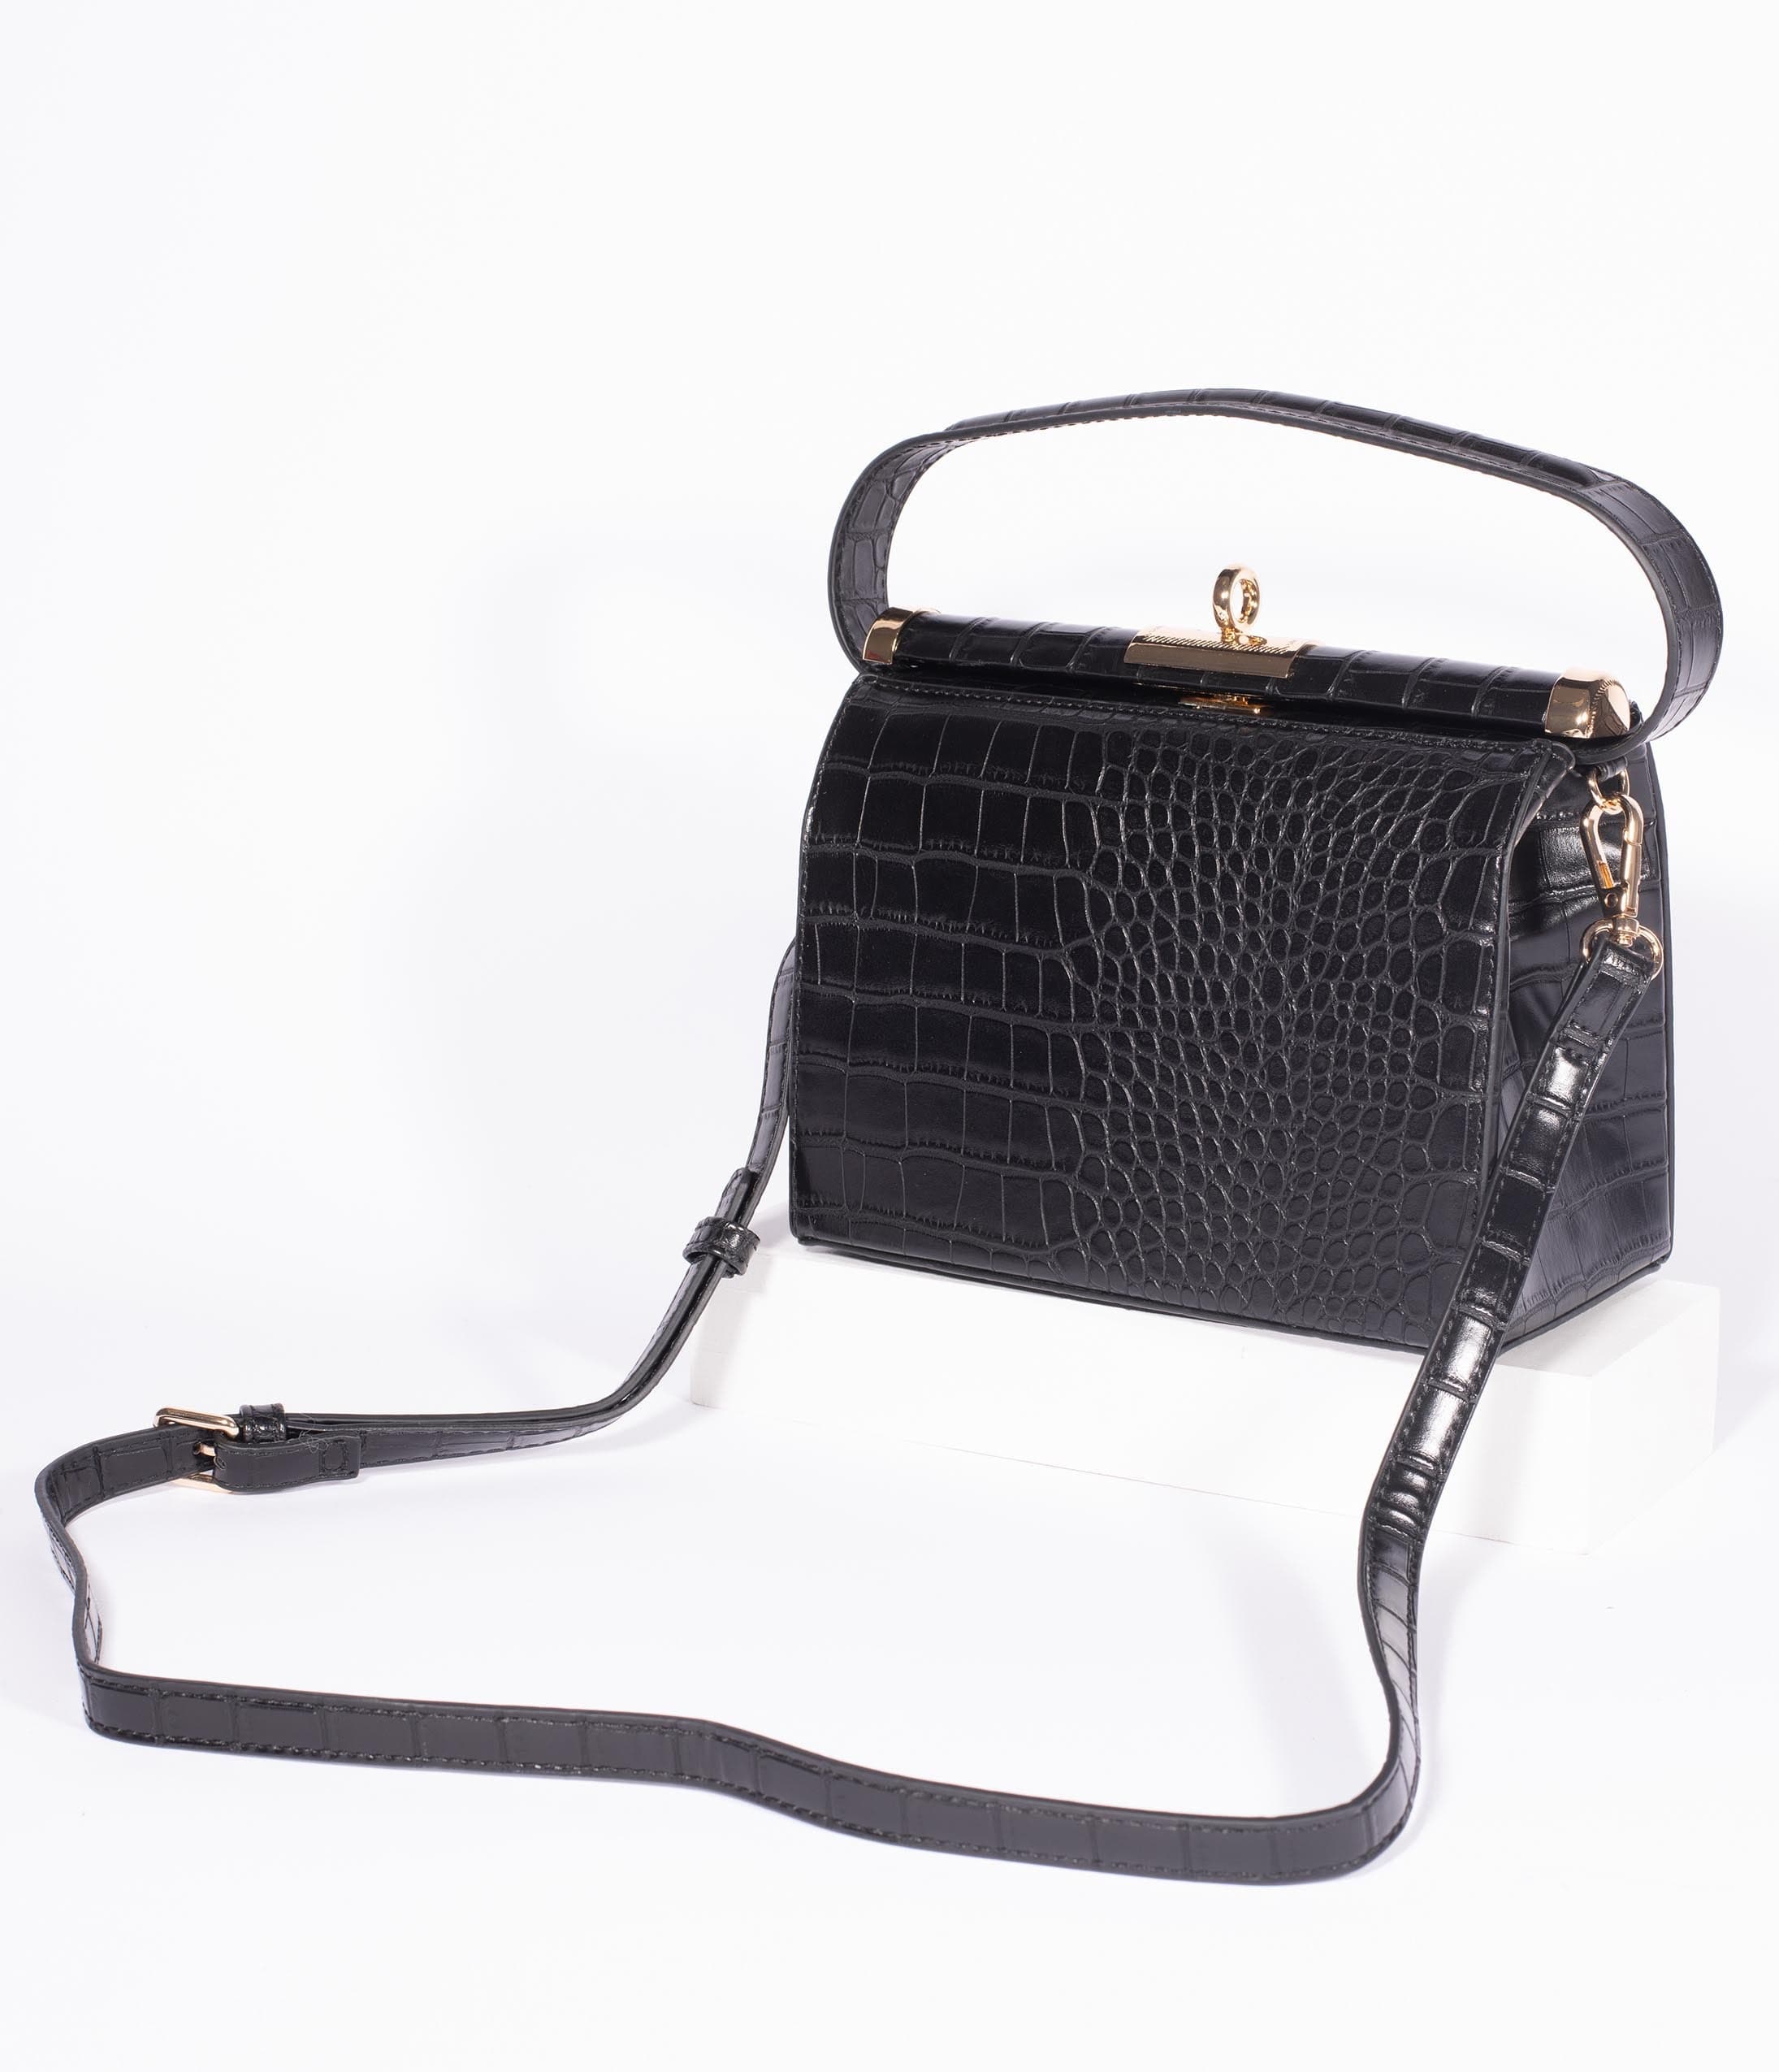 1950s Handbags, Purses, and Evening Bag Styles